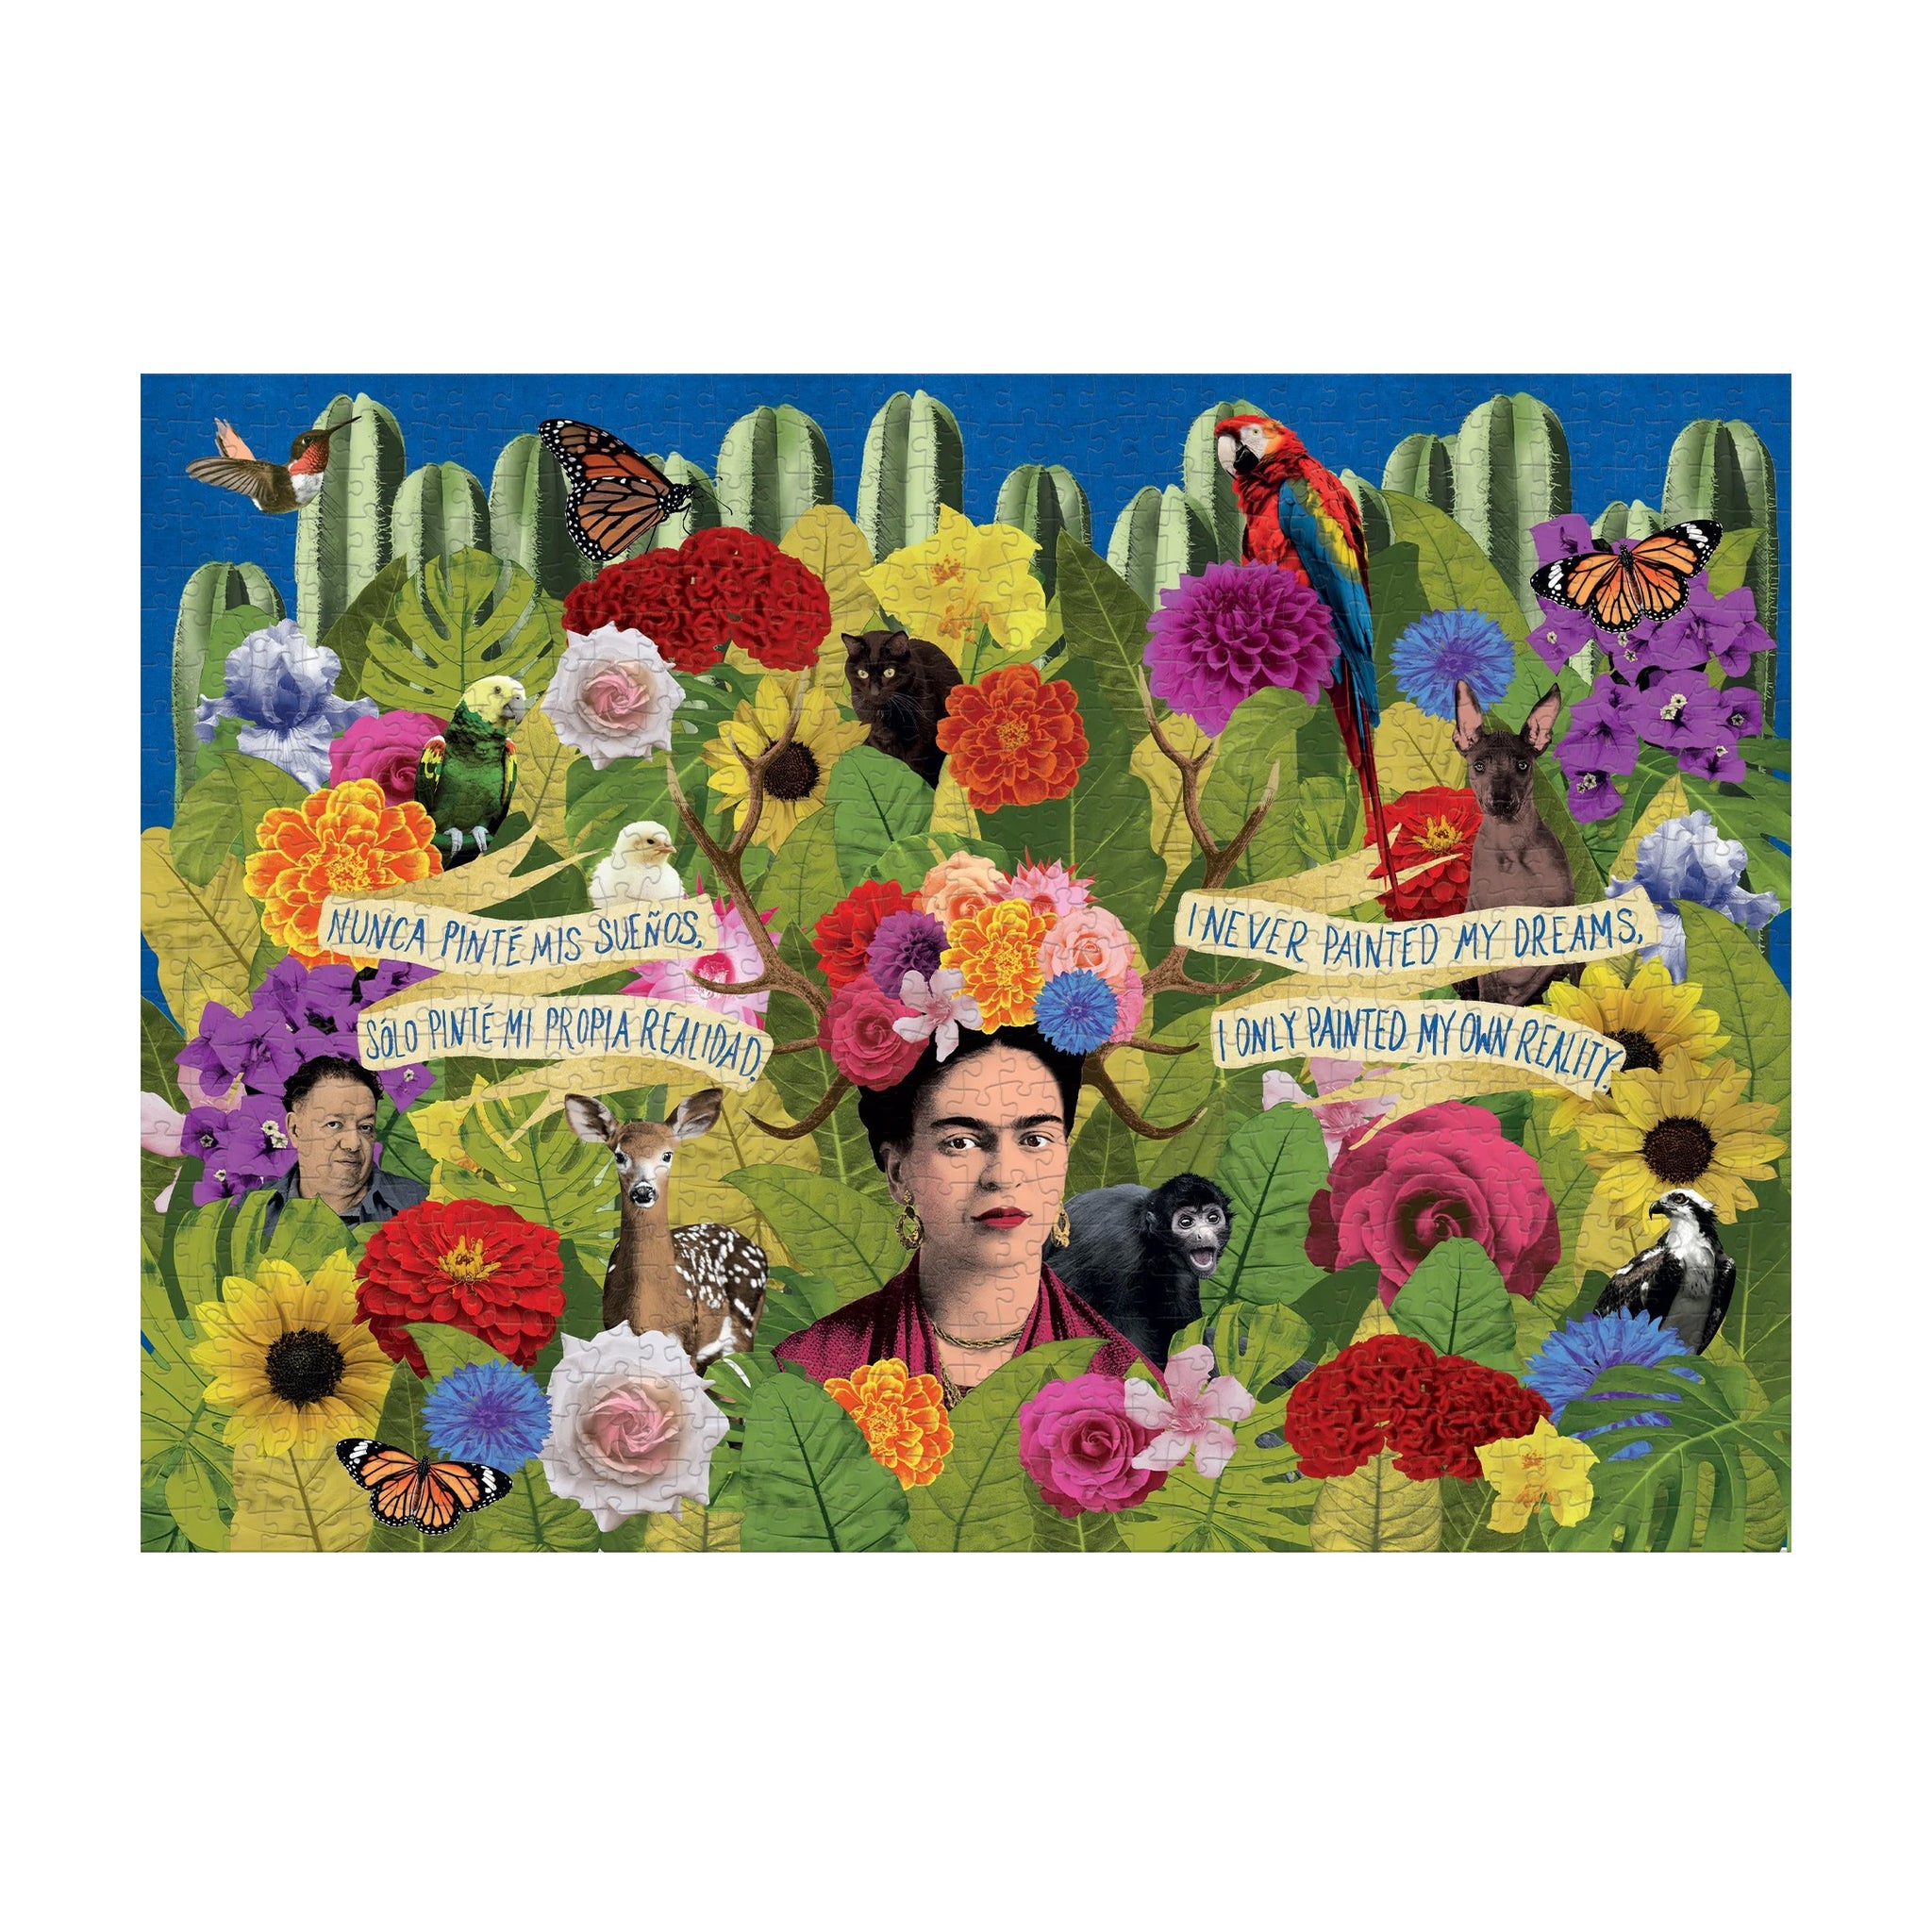 Puzzel Frida's Garden│Frida Kahlo│The Unemployed Philosophers Guild│art. #5685│afbeelding puzzel met witte rand